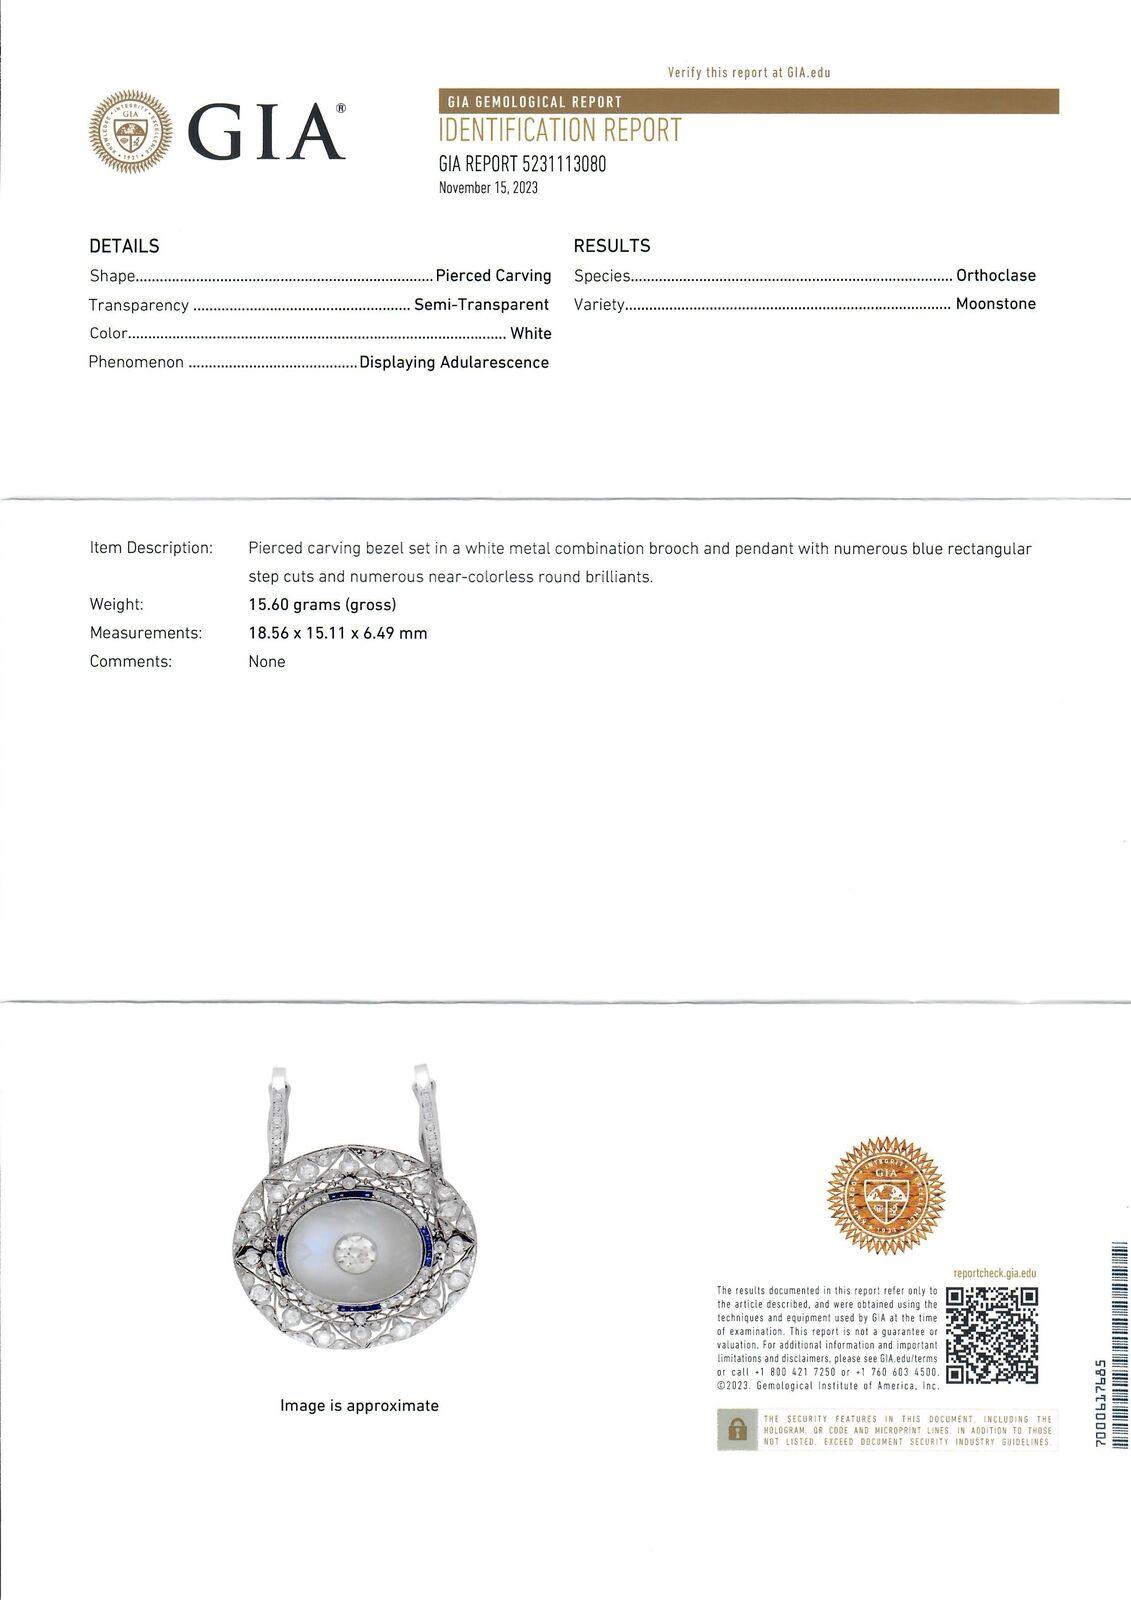 Belle Epoque Platinum GIA Blue Moonstone Sapphire Diamond Brooch Pendant For Sale 5